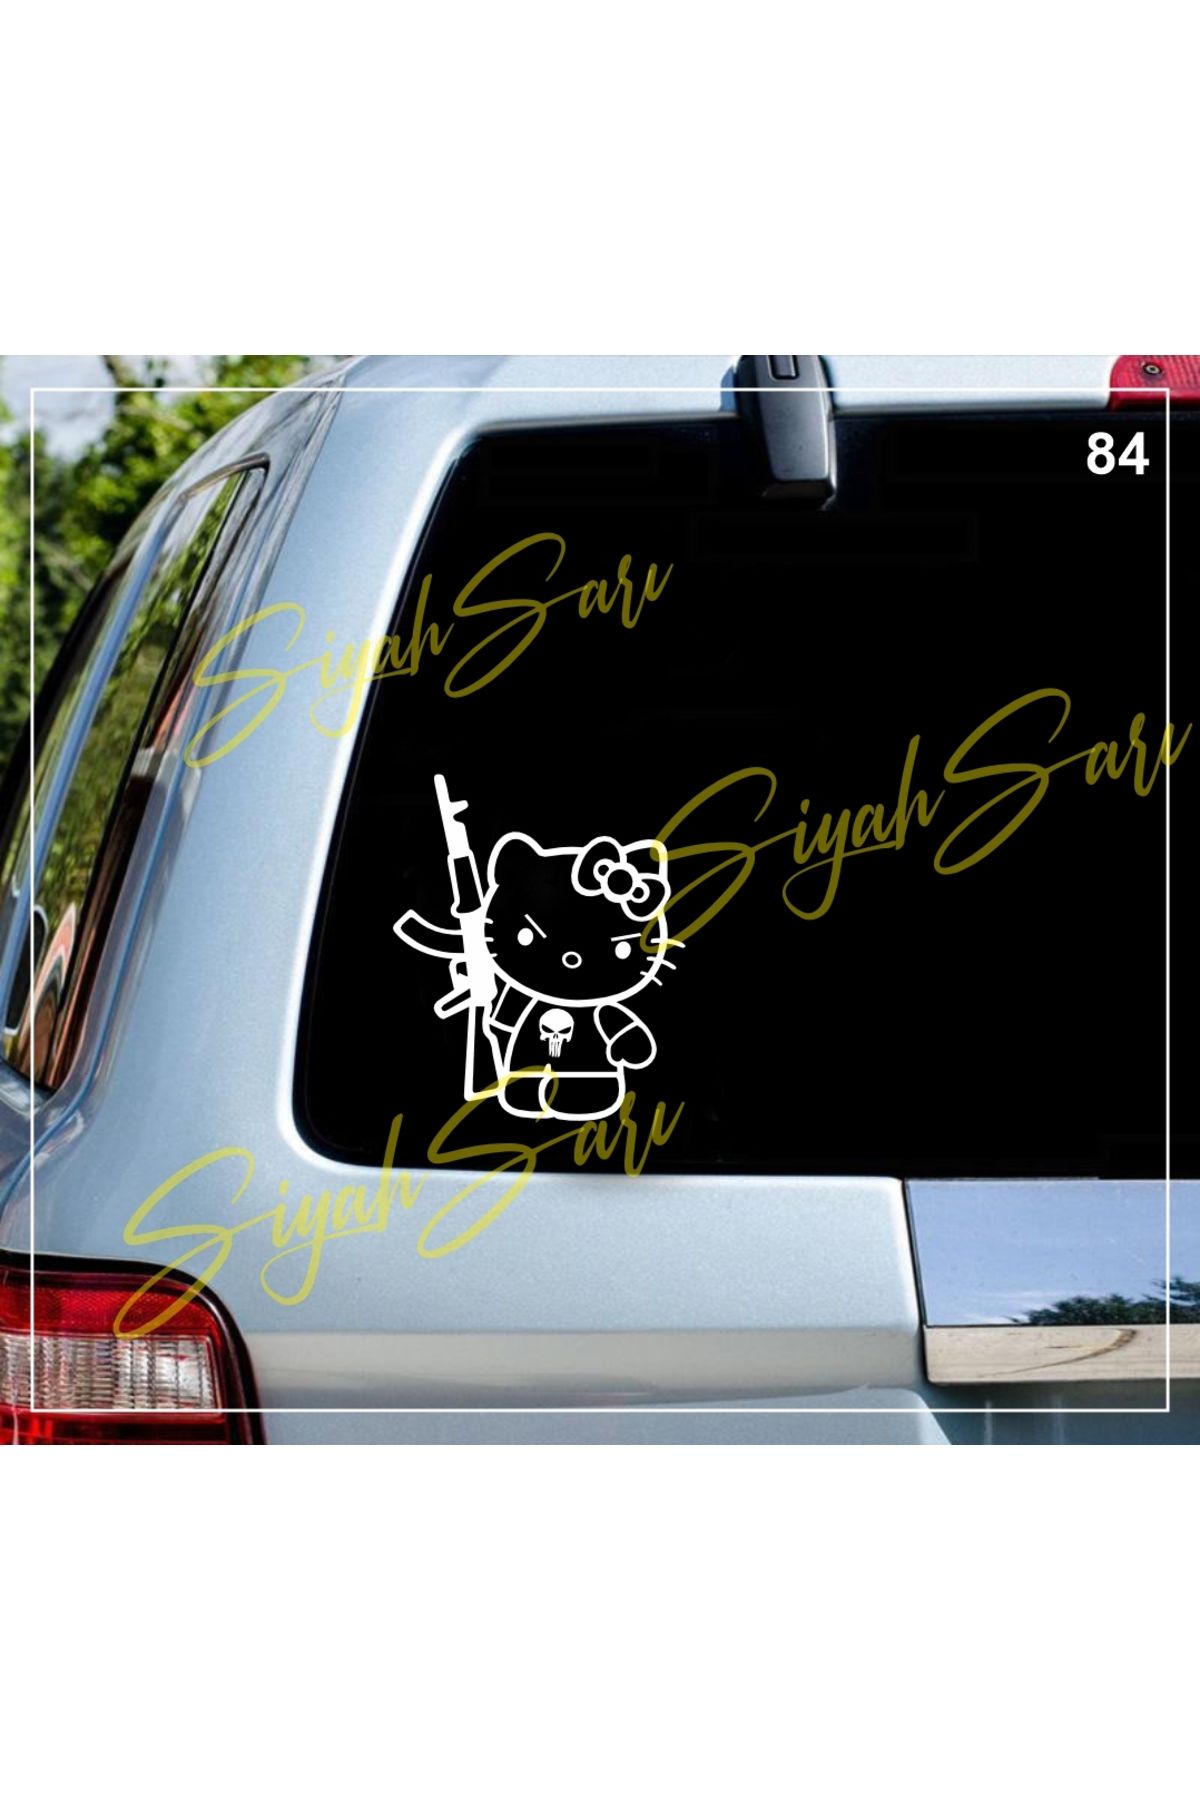 S&S HEDİYELİK EŞYA Hello Kitty Araba Araç Decal Oto Racing Jeep Sticker Etiket Folyo